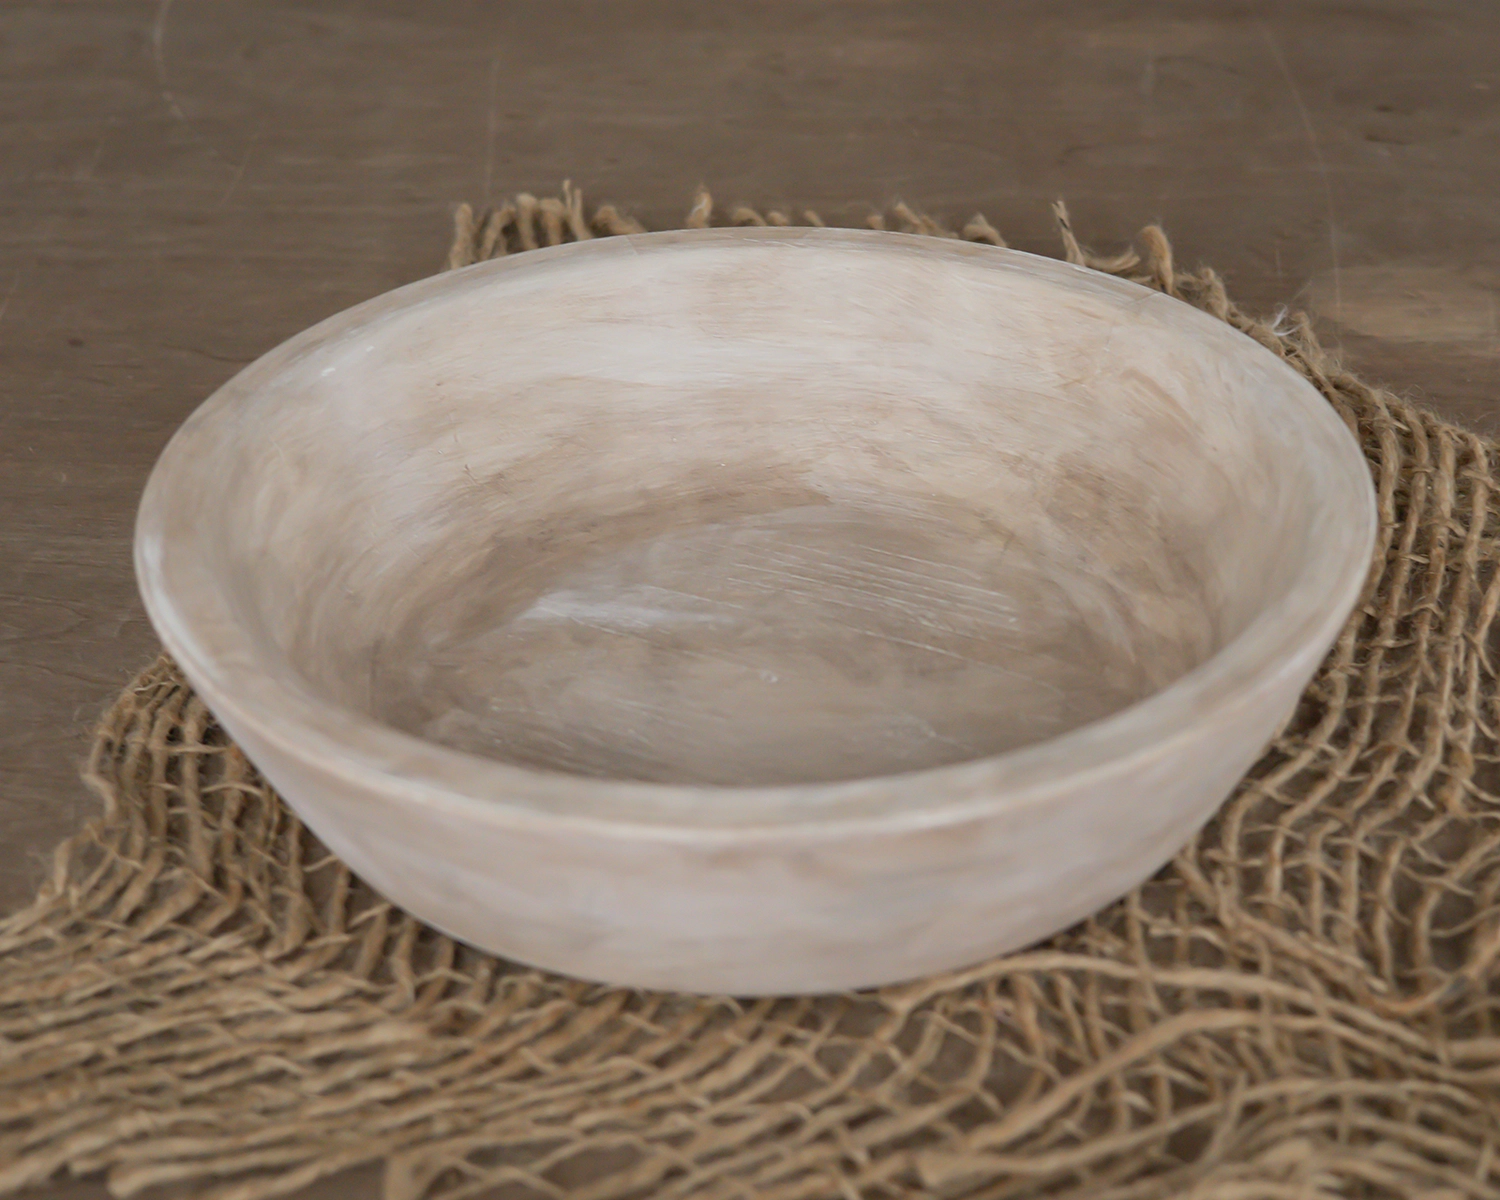  Natural color round wooden bowl - 38cm